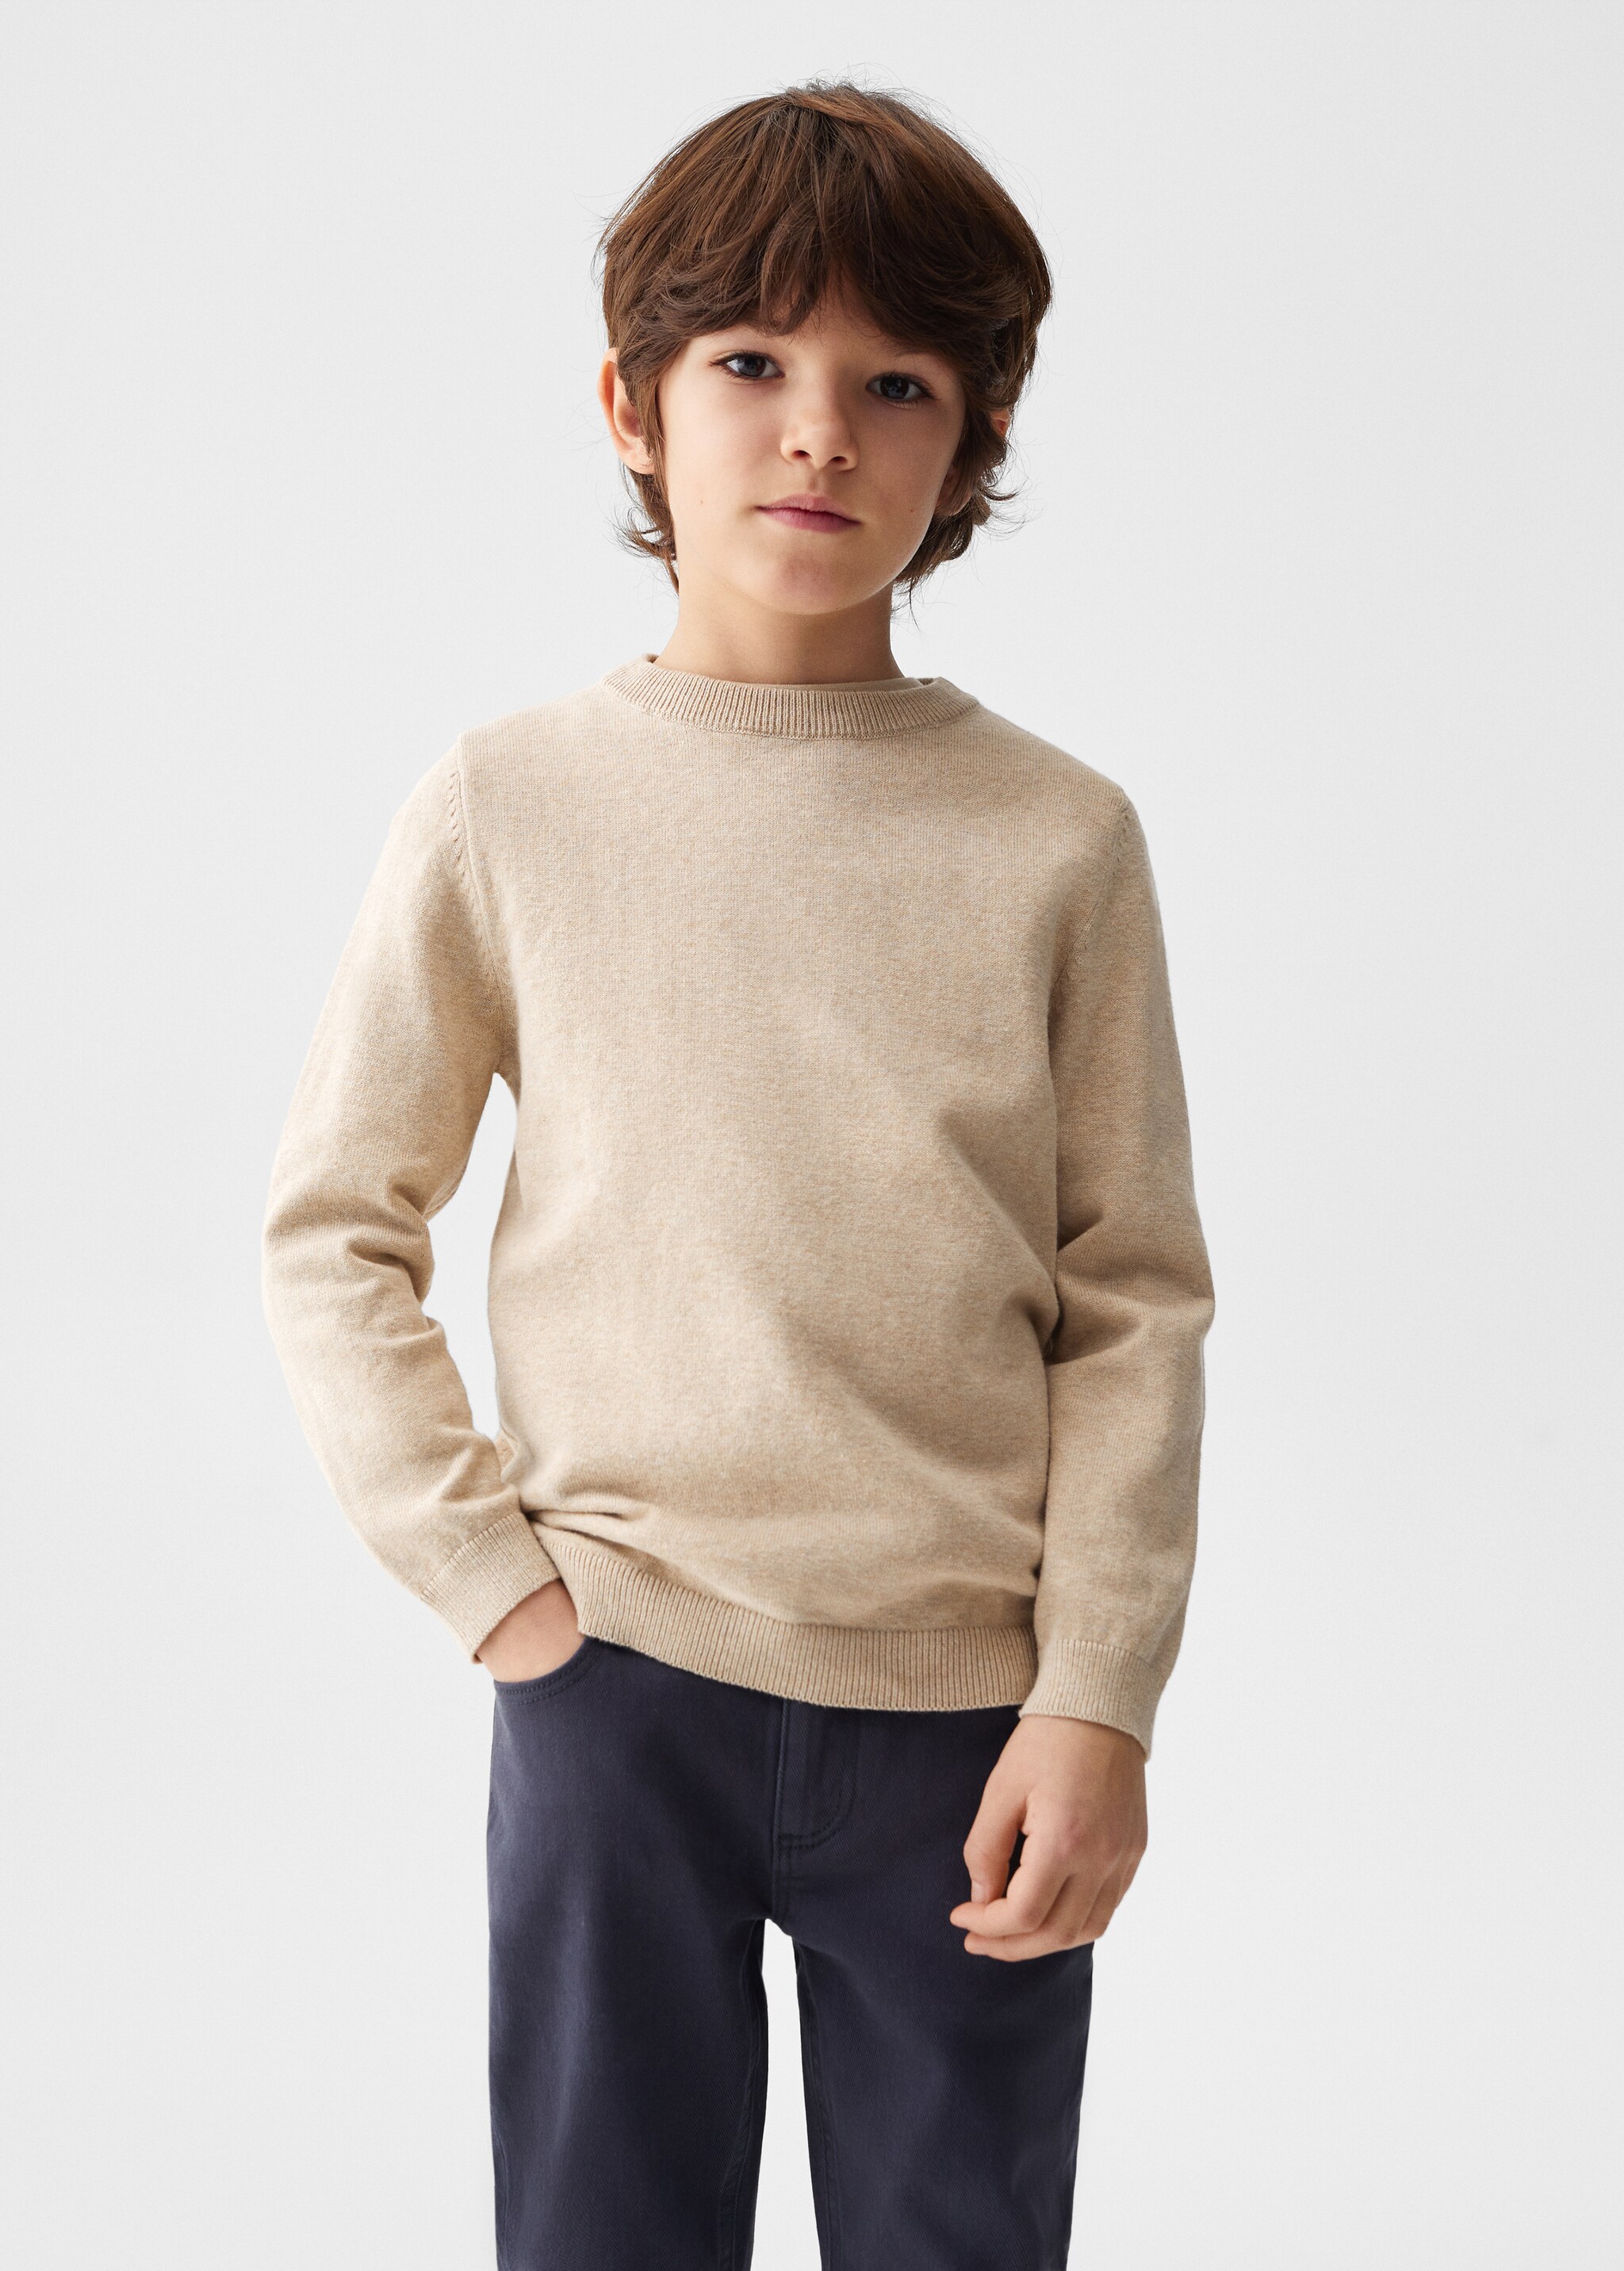 Knit cotton sweater - Medium plane